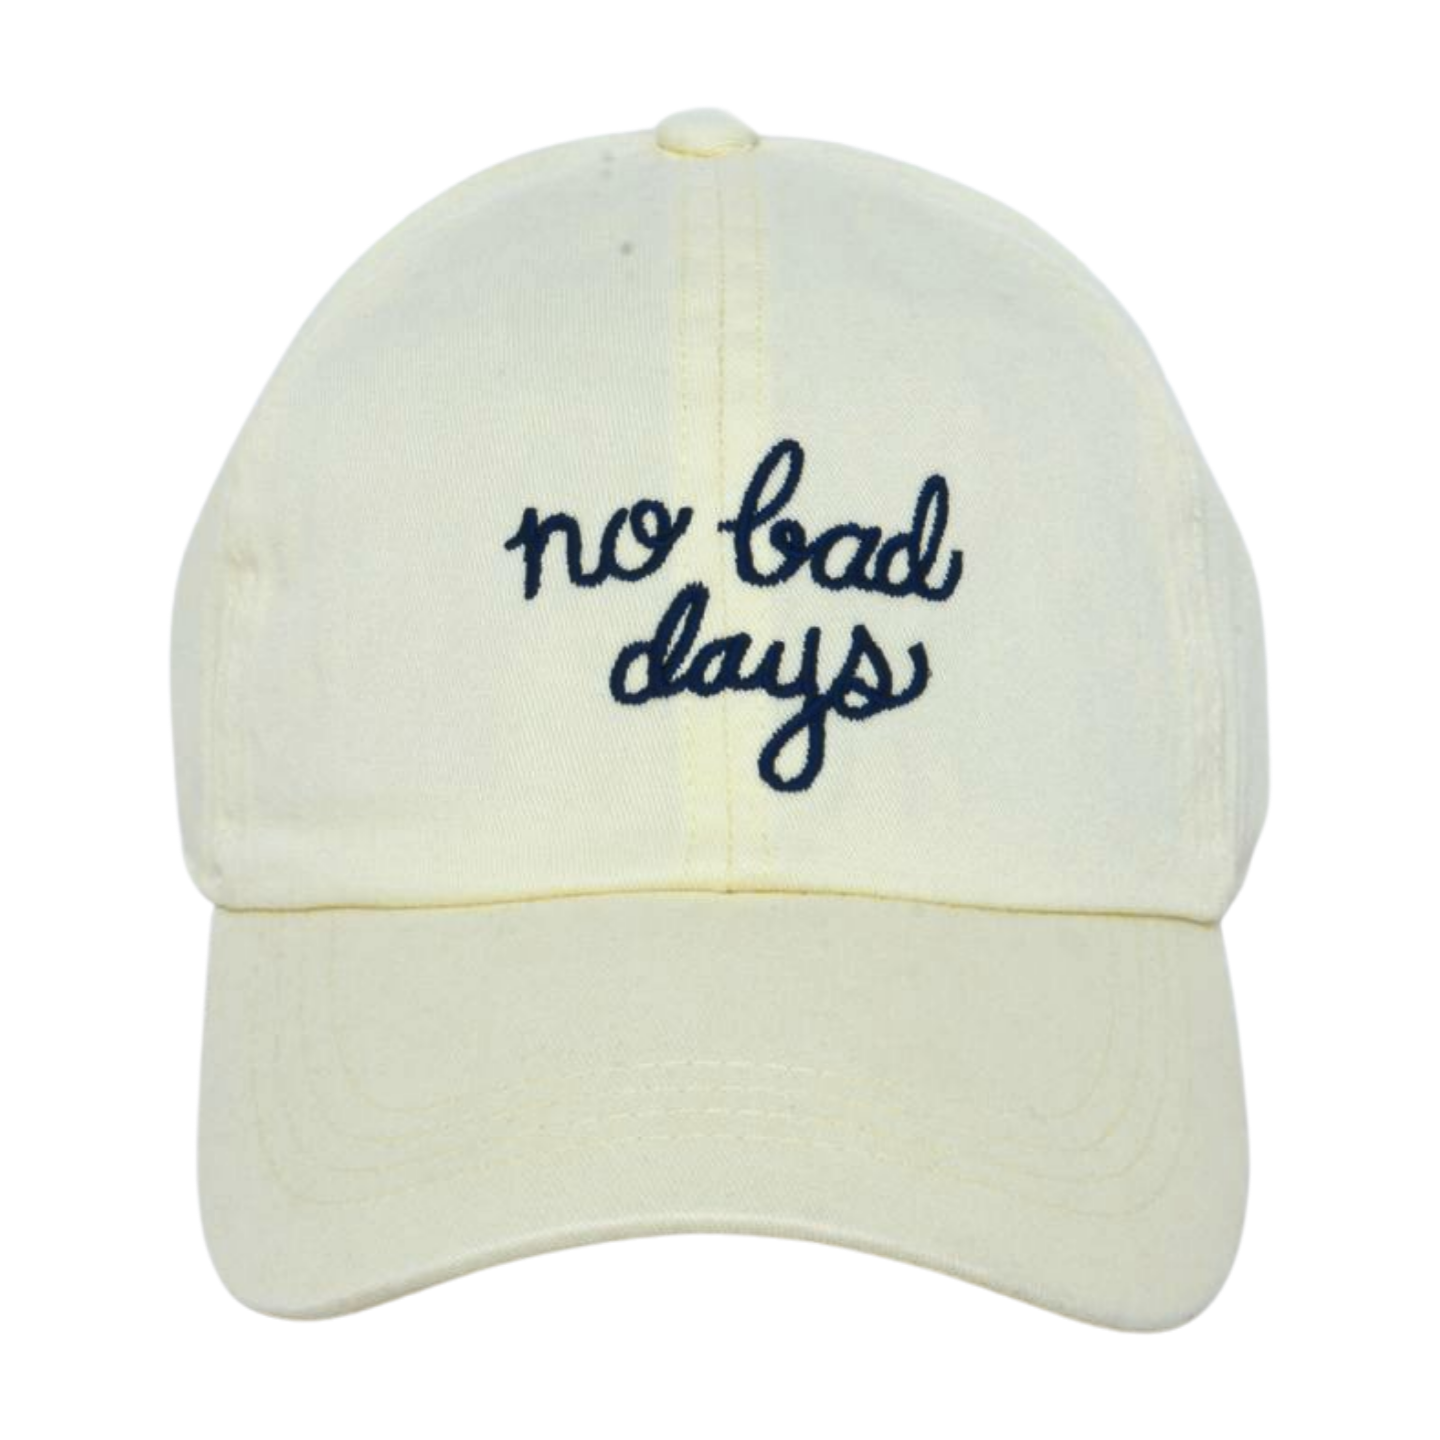 LCAP3479 - "NO BAD DAYS" EMBROIDERED BASEBALL CAP